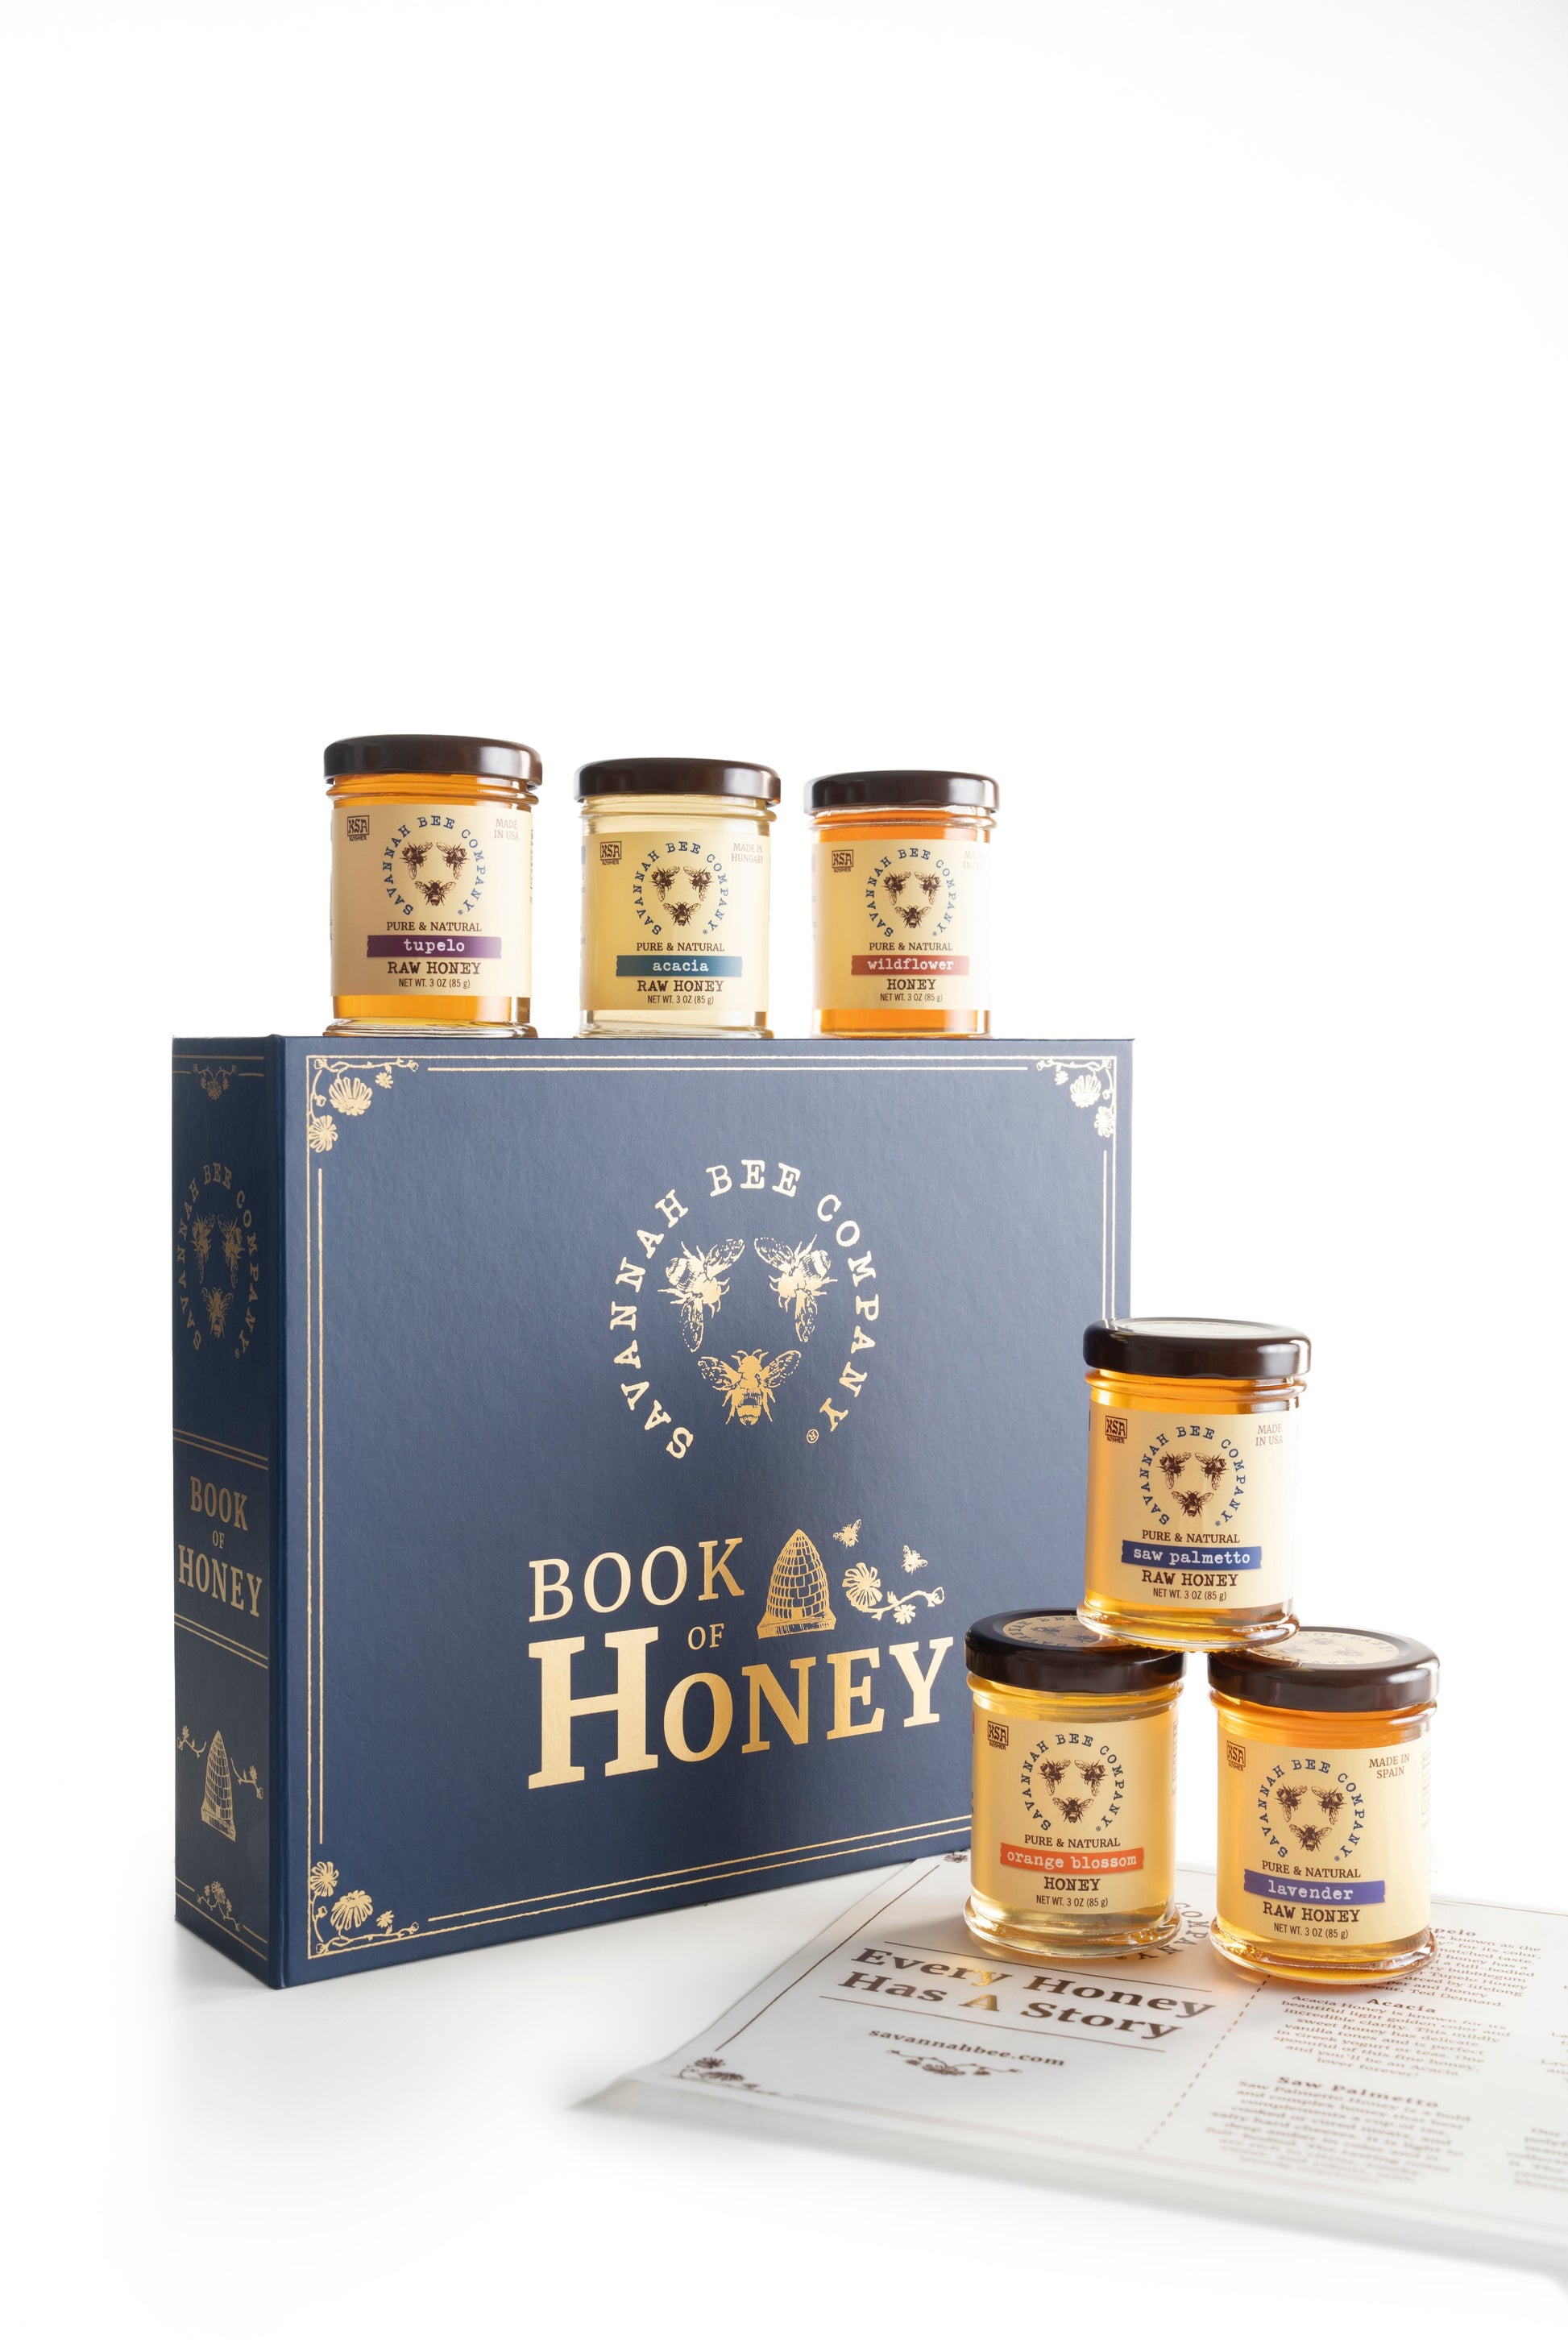 Savannah Bee Company Book Of Honey. The Book of Honey features 6 of our 3 oz honeys. The Honeys vary by season. 